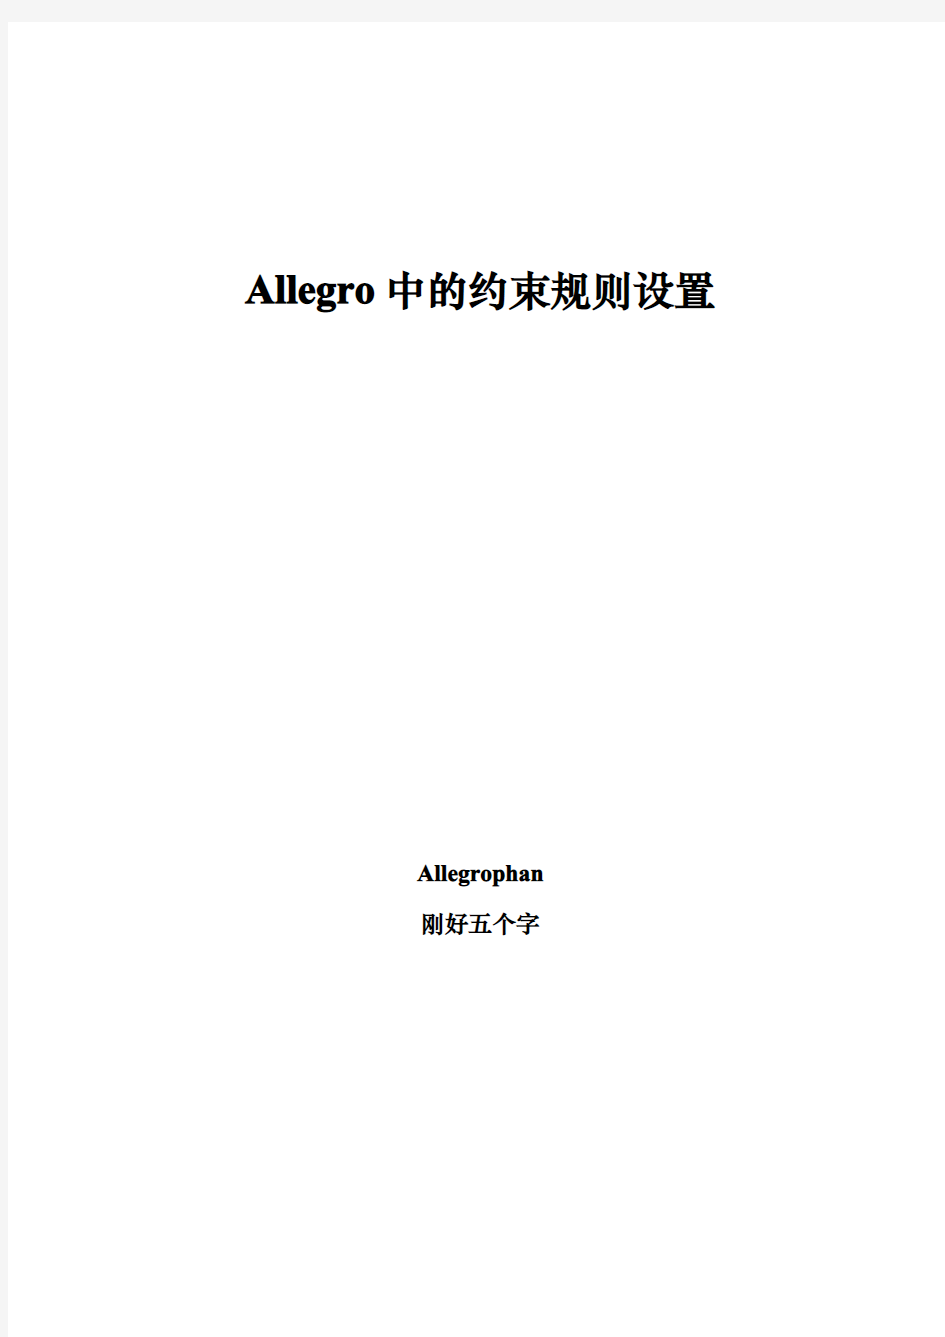 Allegro中的约束规则设置V1.2